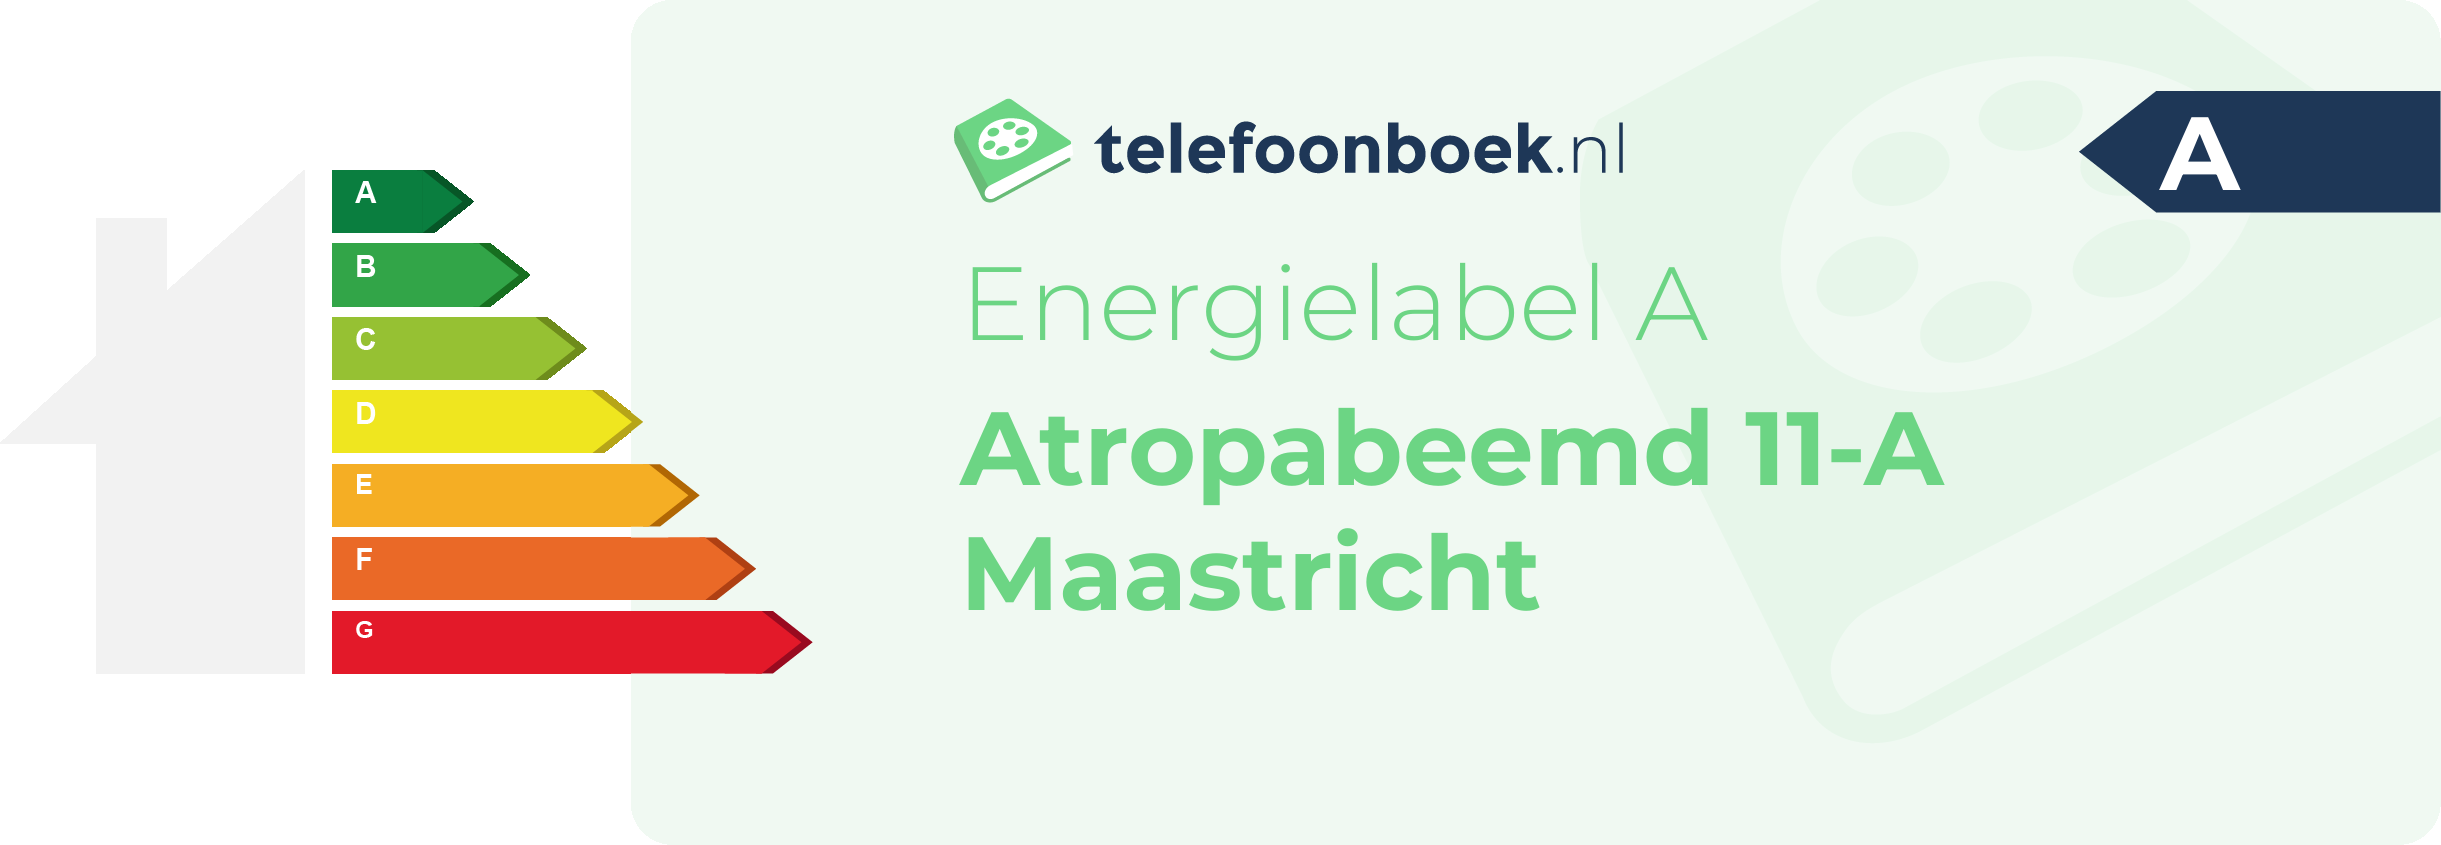 Energielabel Atropabeemd 11-A Maastricht